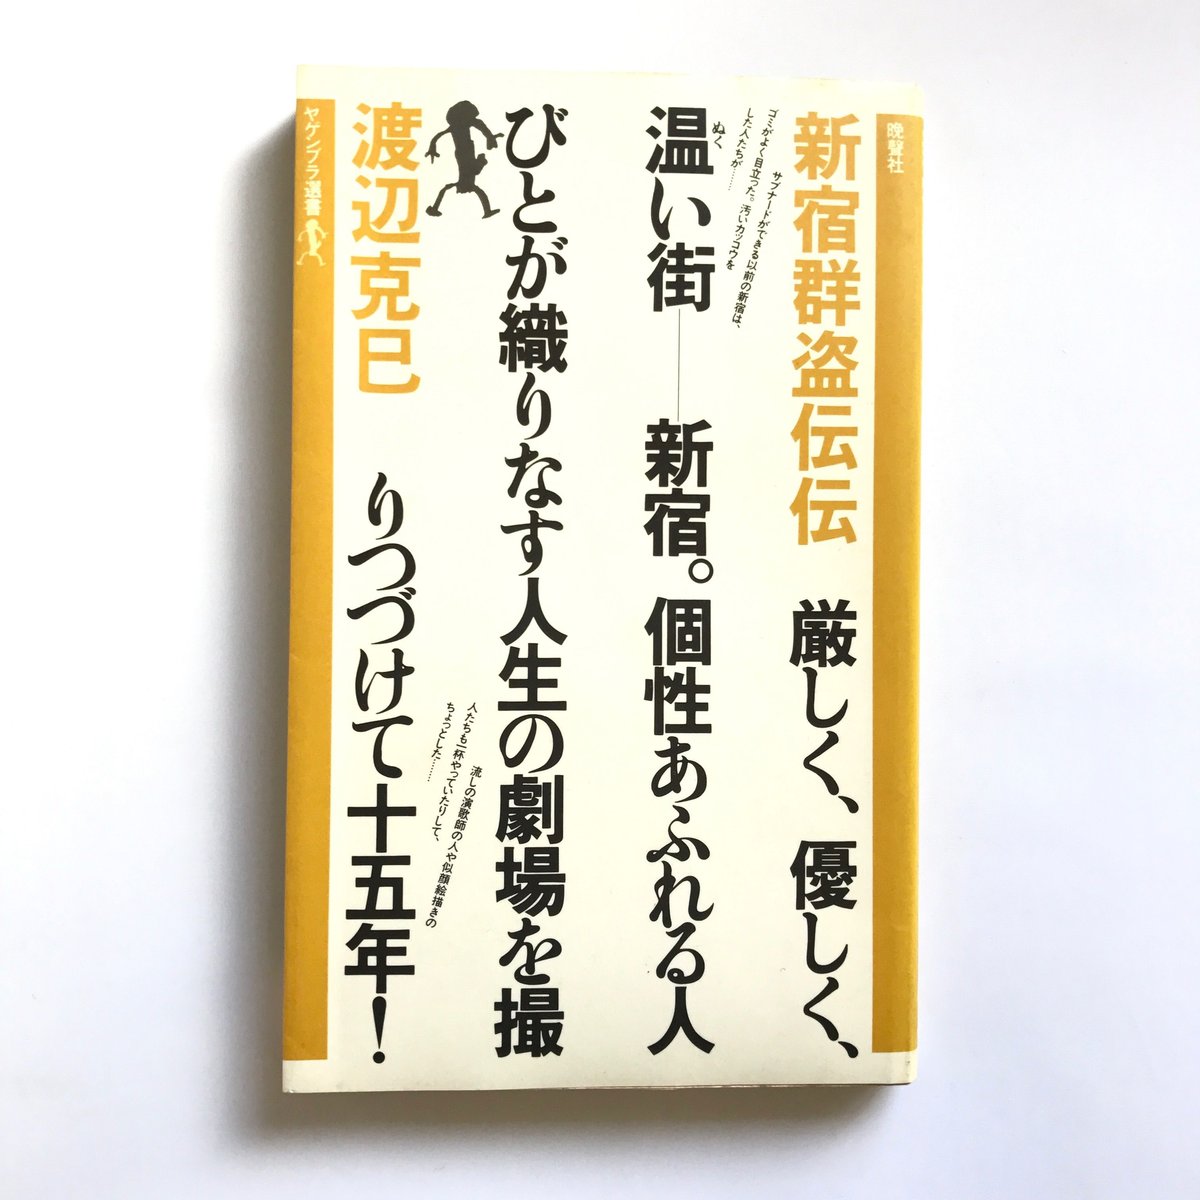 Title/ 新宿群盗伝伝 Author/ 渡辺克巳